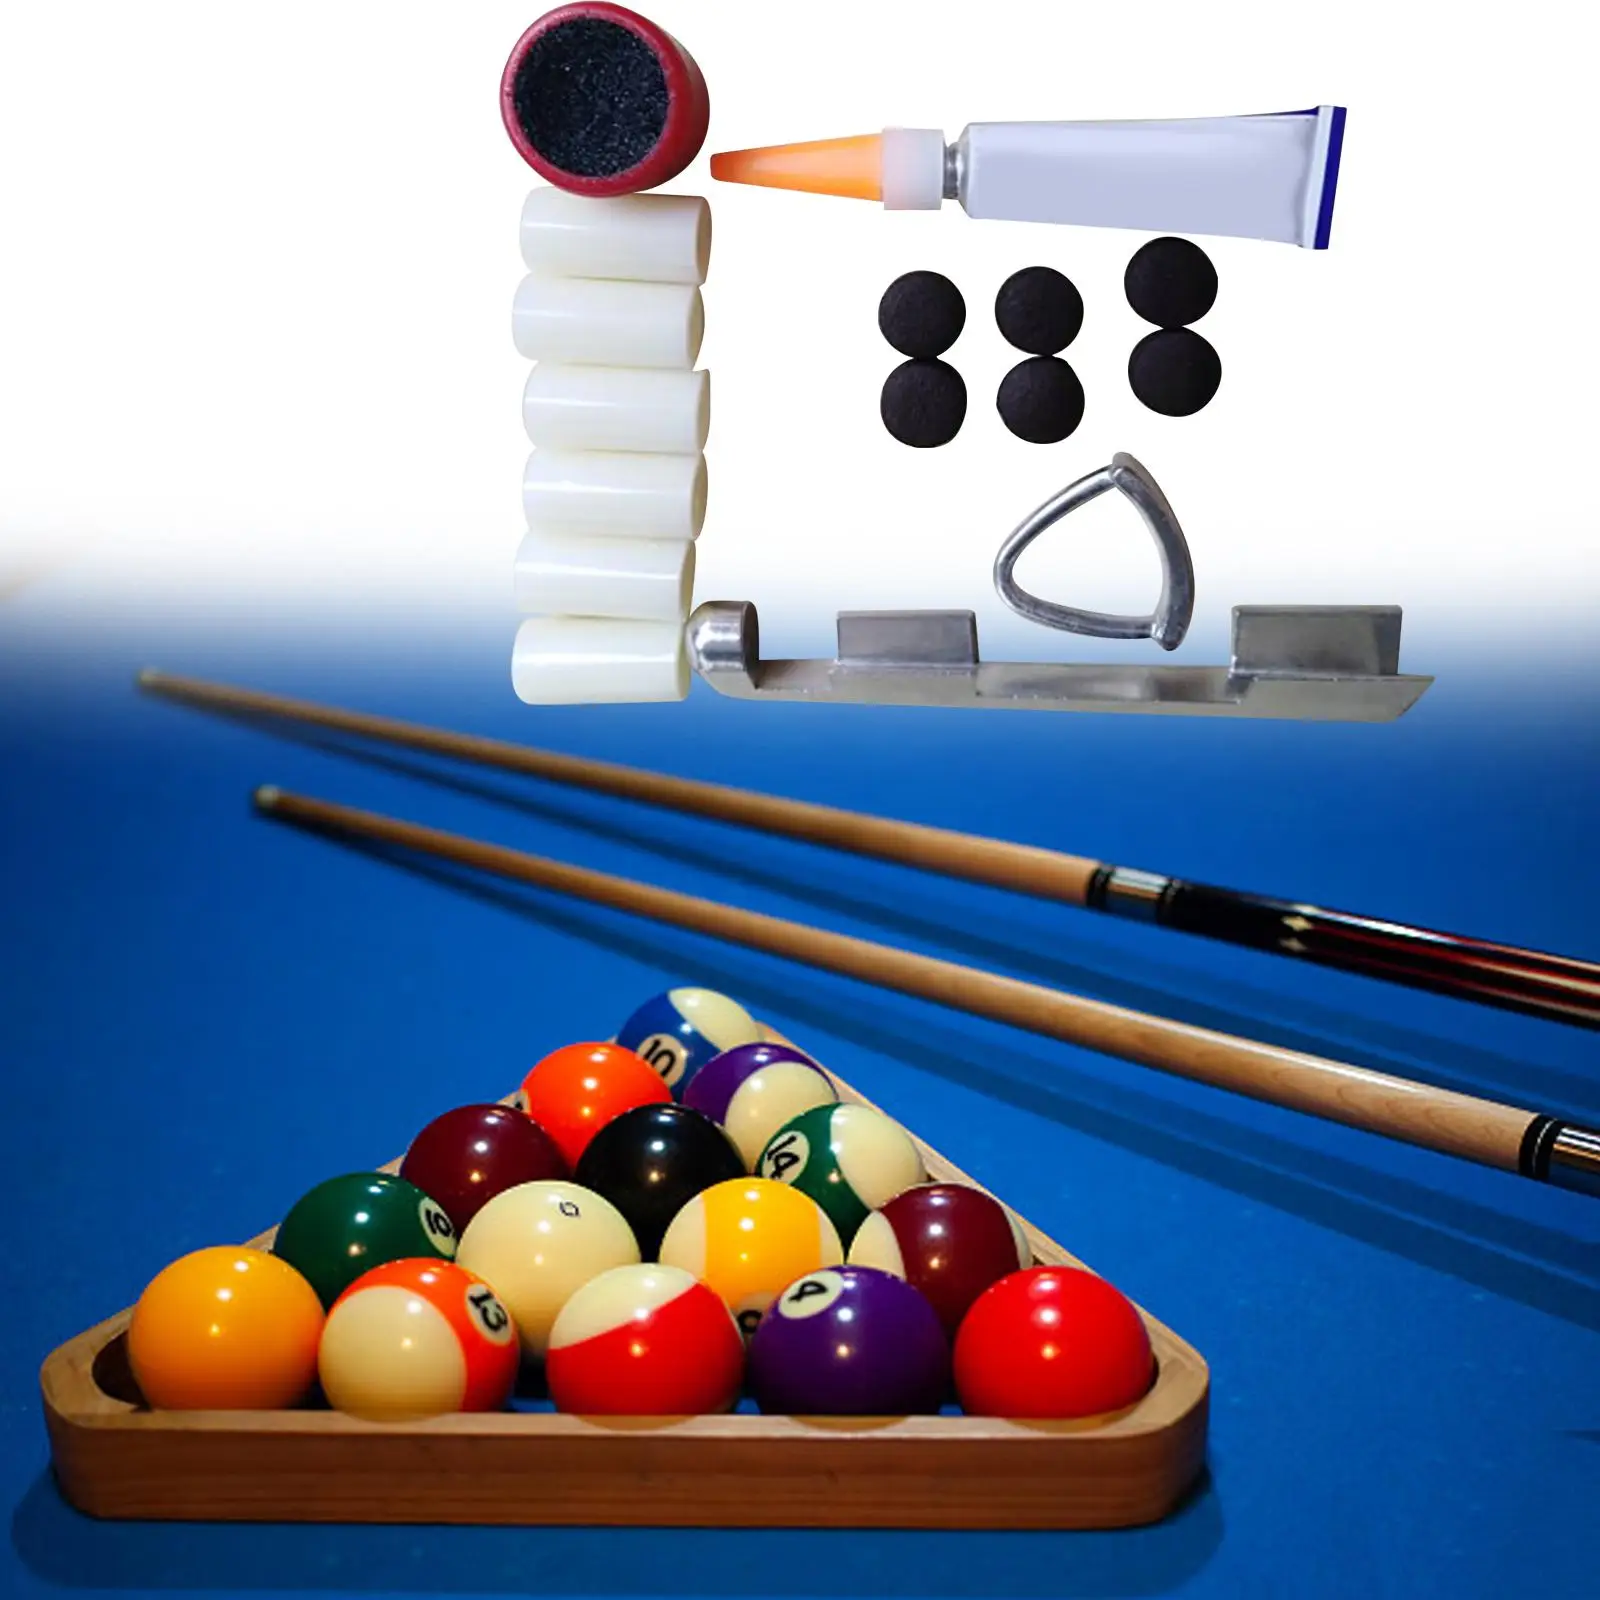 Pool Cue Repair Tip Kit Cue Tips Accessories Maintenance Cue Ferrules Cue Clamp Glue Billiard Cue Repair Snooker Cue Repairs Kit